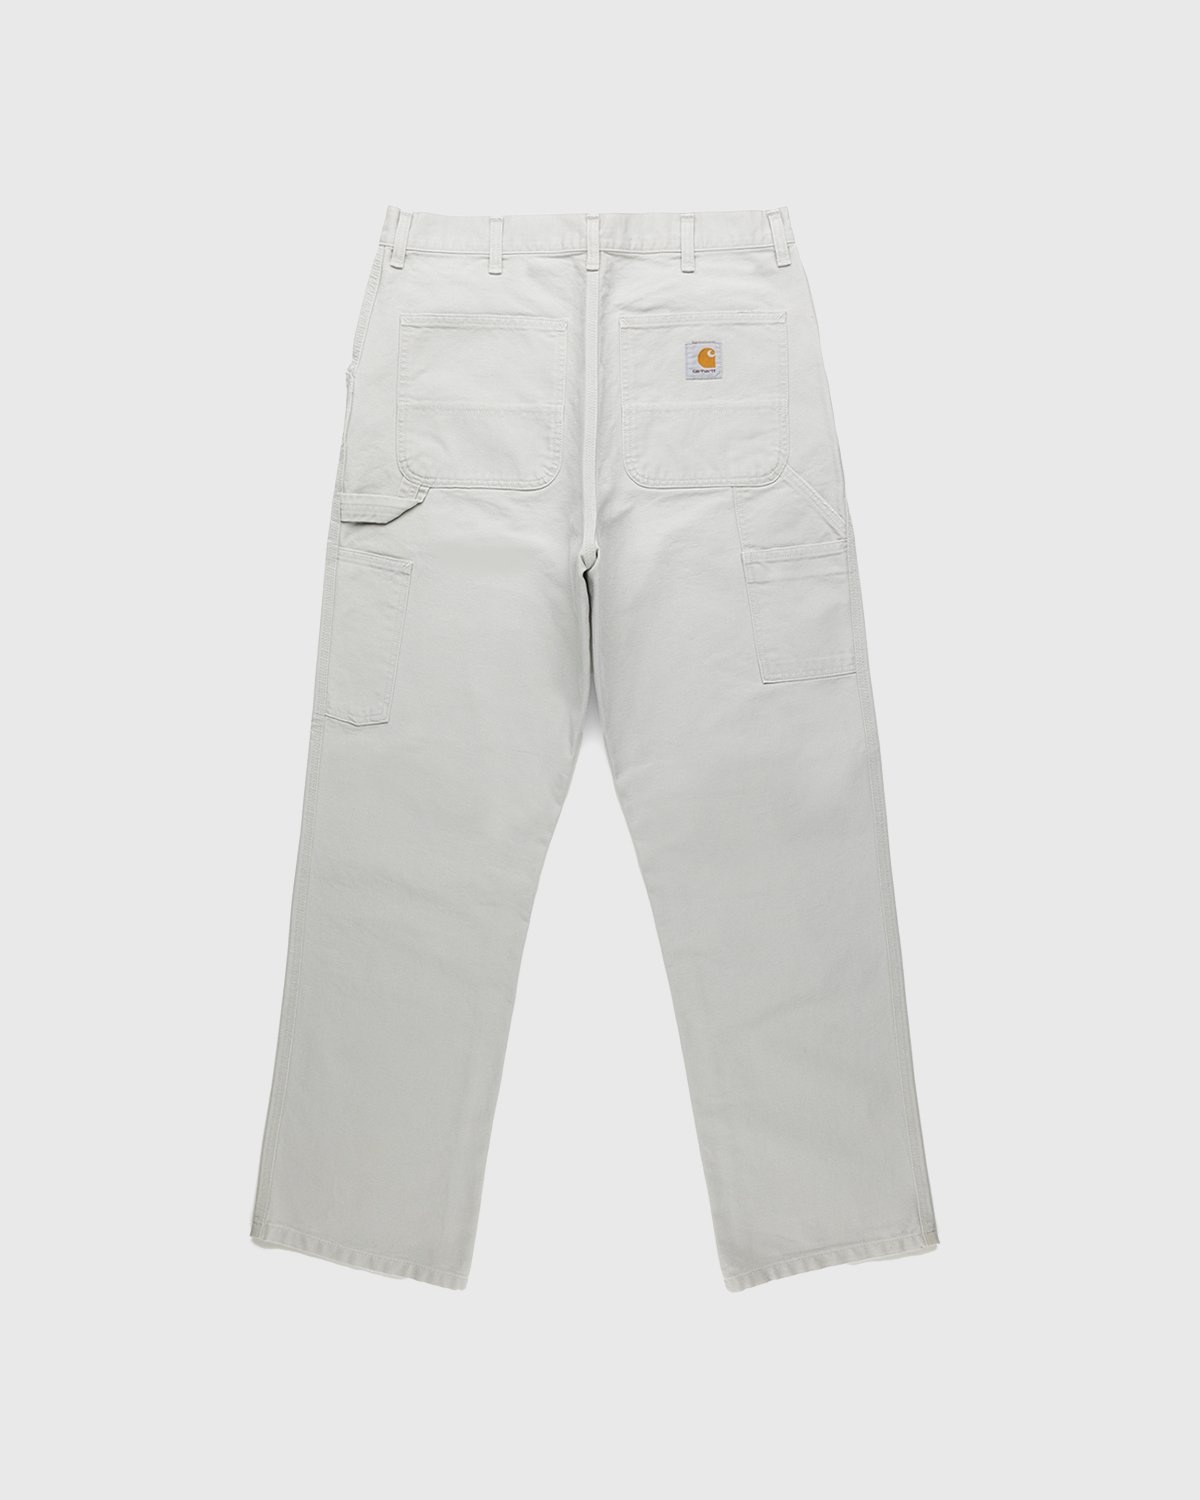 Carhartt WIP – Single Knee Pant Aged Canvas Grey - Pants - Grey - Image 2